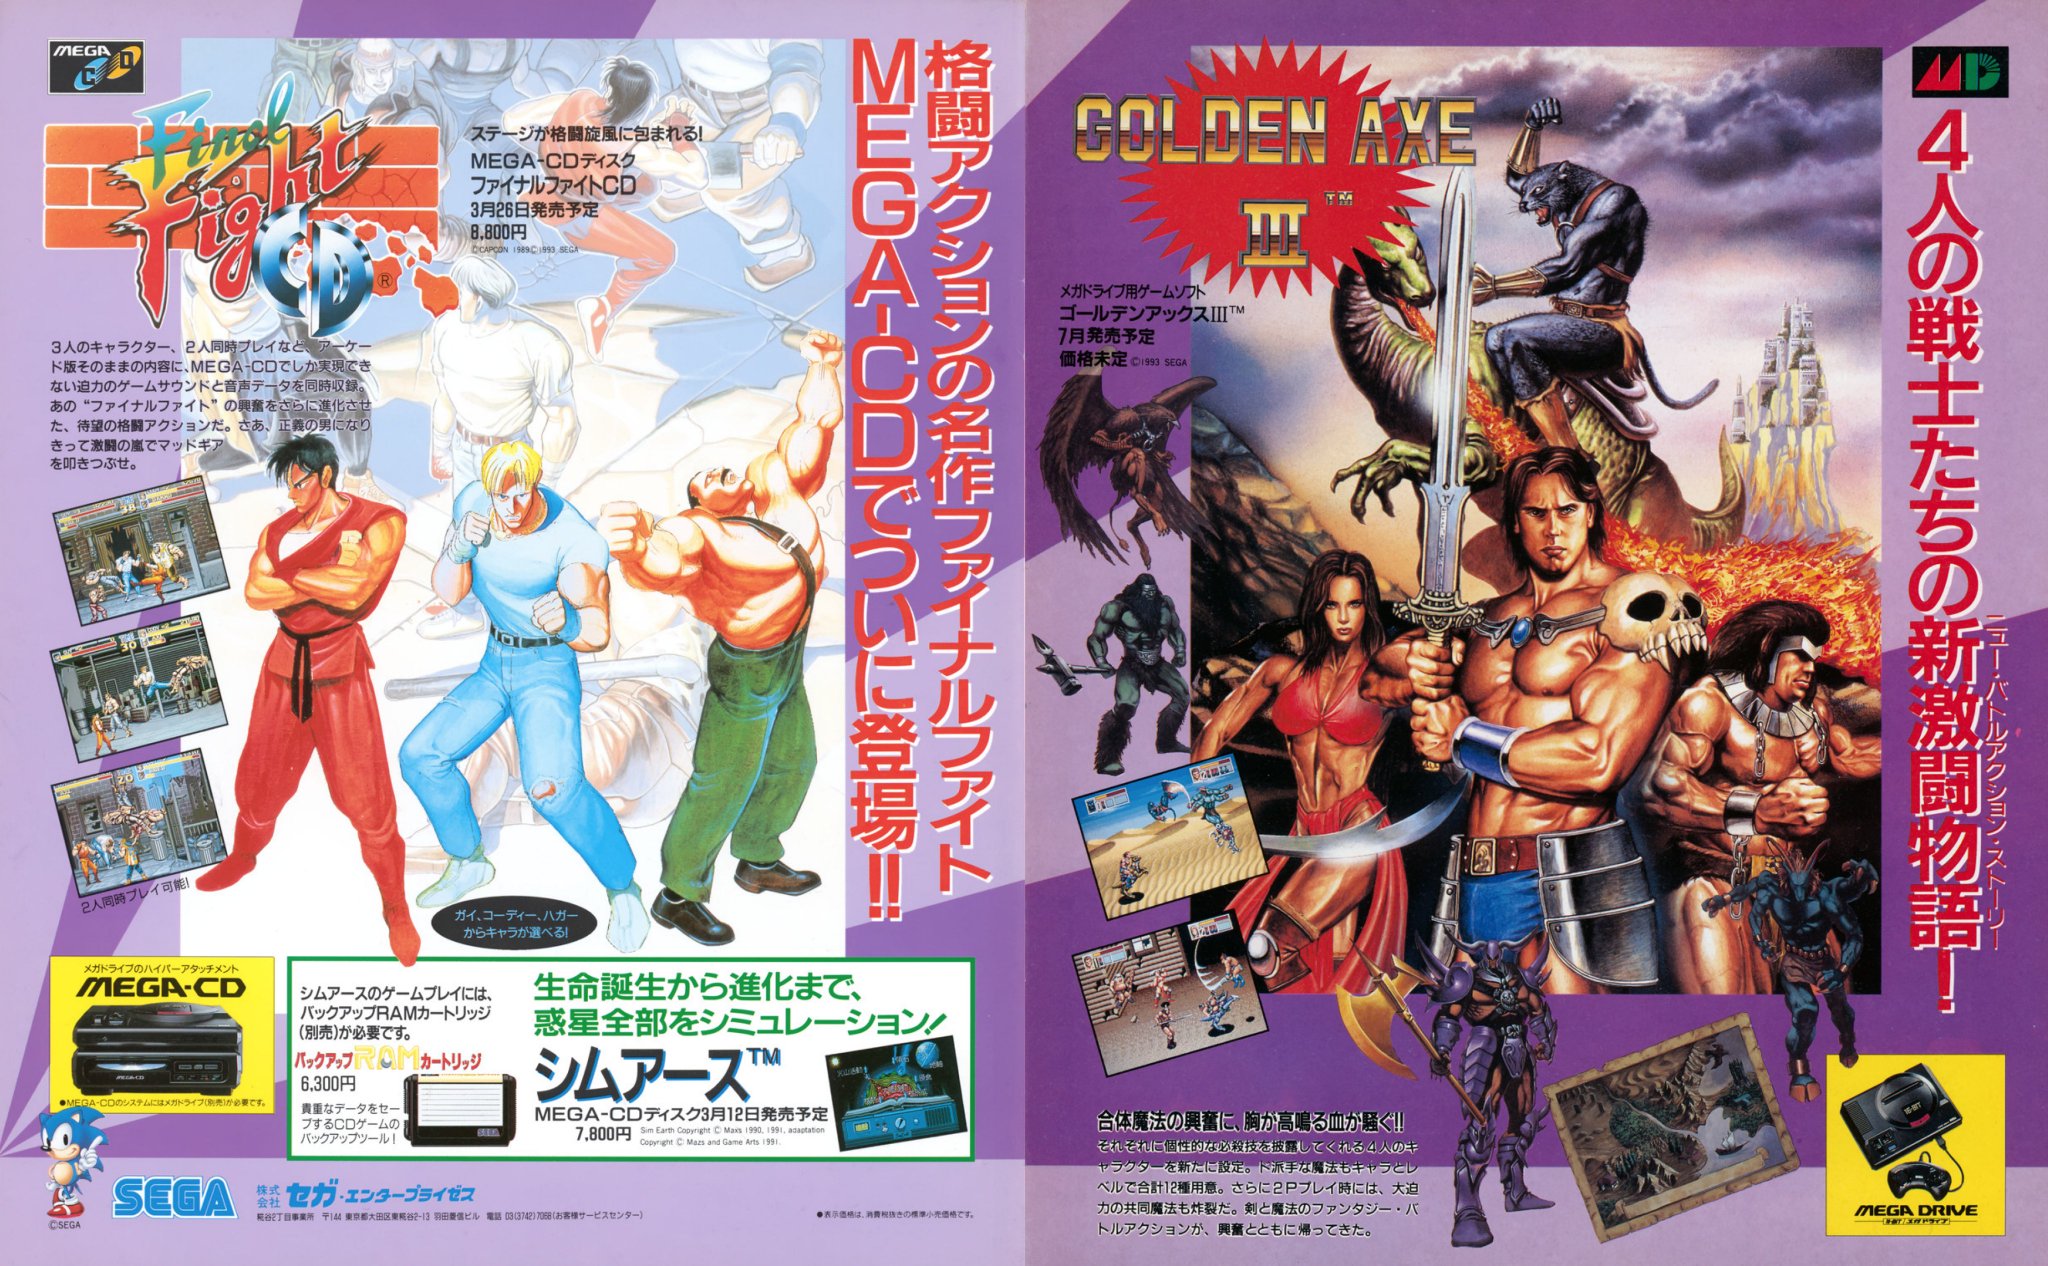 French Kiss Retrogamer Final Fight Cd ファイナルファイト ｃｄ And Golden Axe Iii ゴールデンアックス Iii Capcom Sega Megadrive Retrogaming